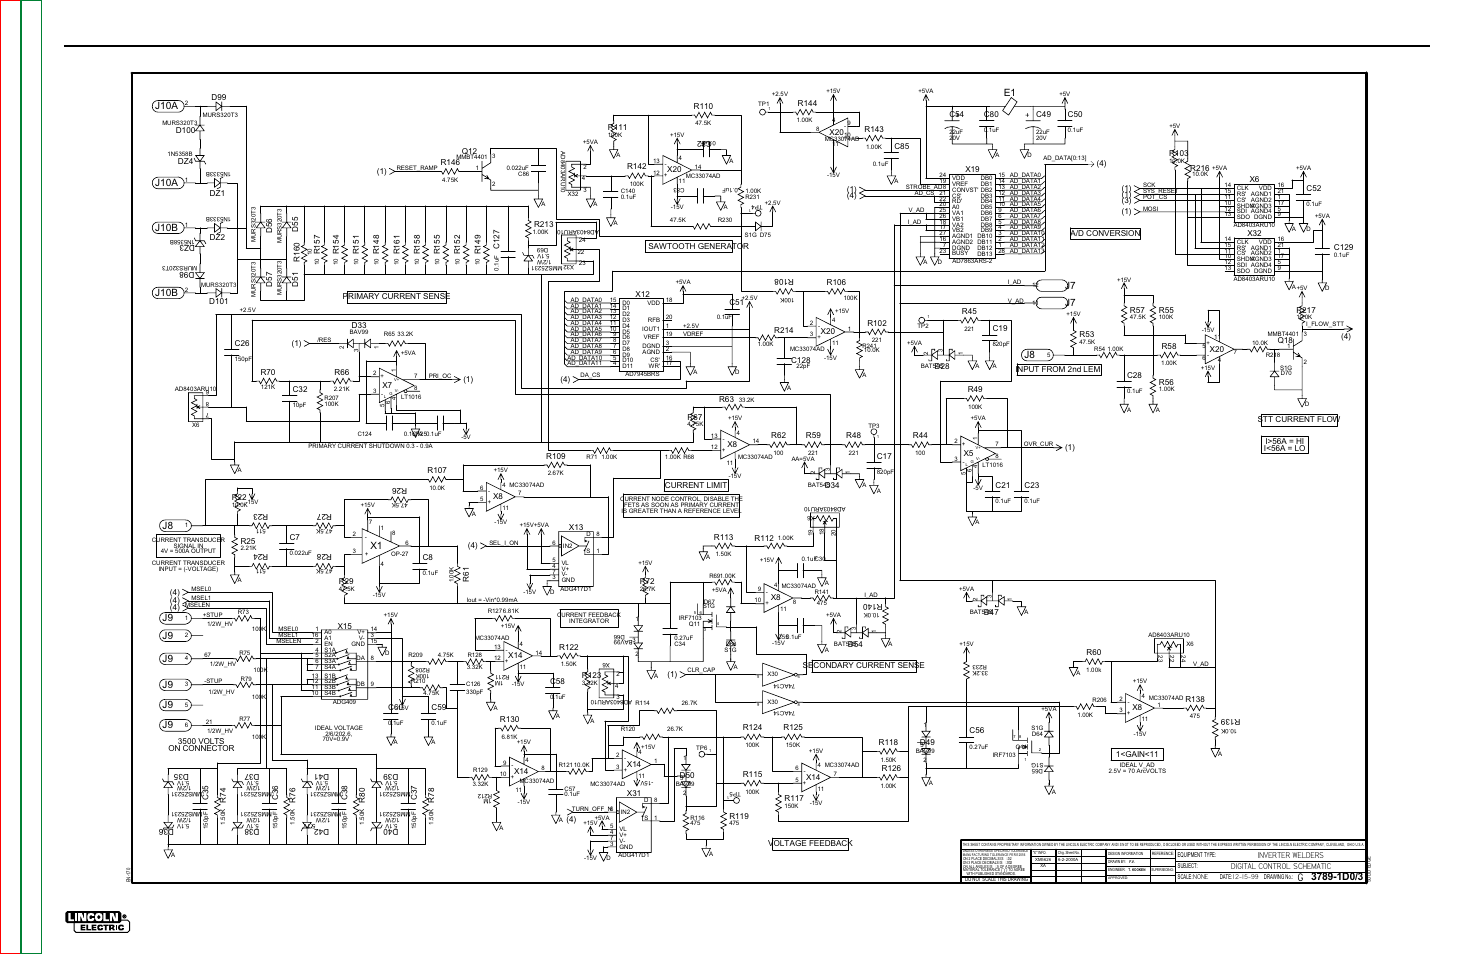 Electrical diagrams, Schematic - control pc board #3, V350-pro